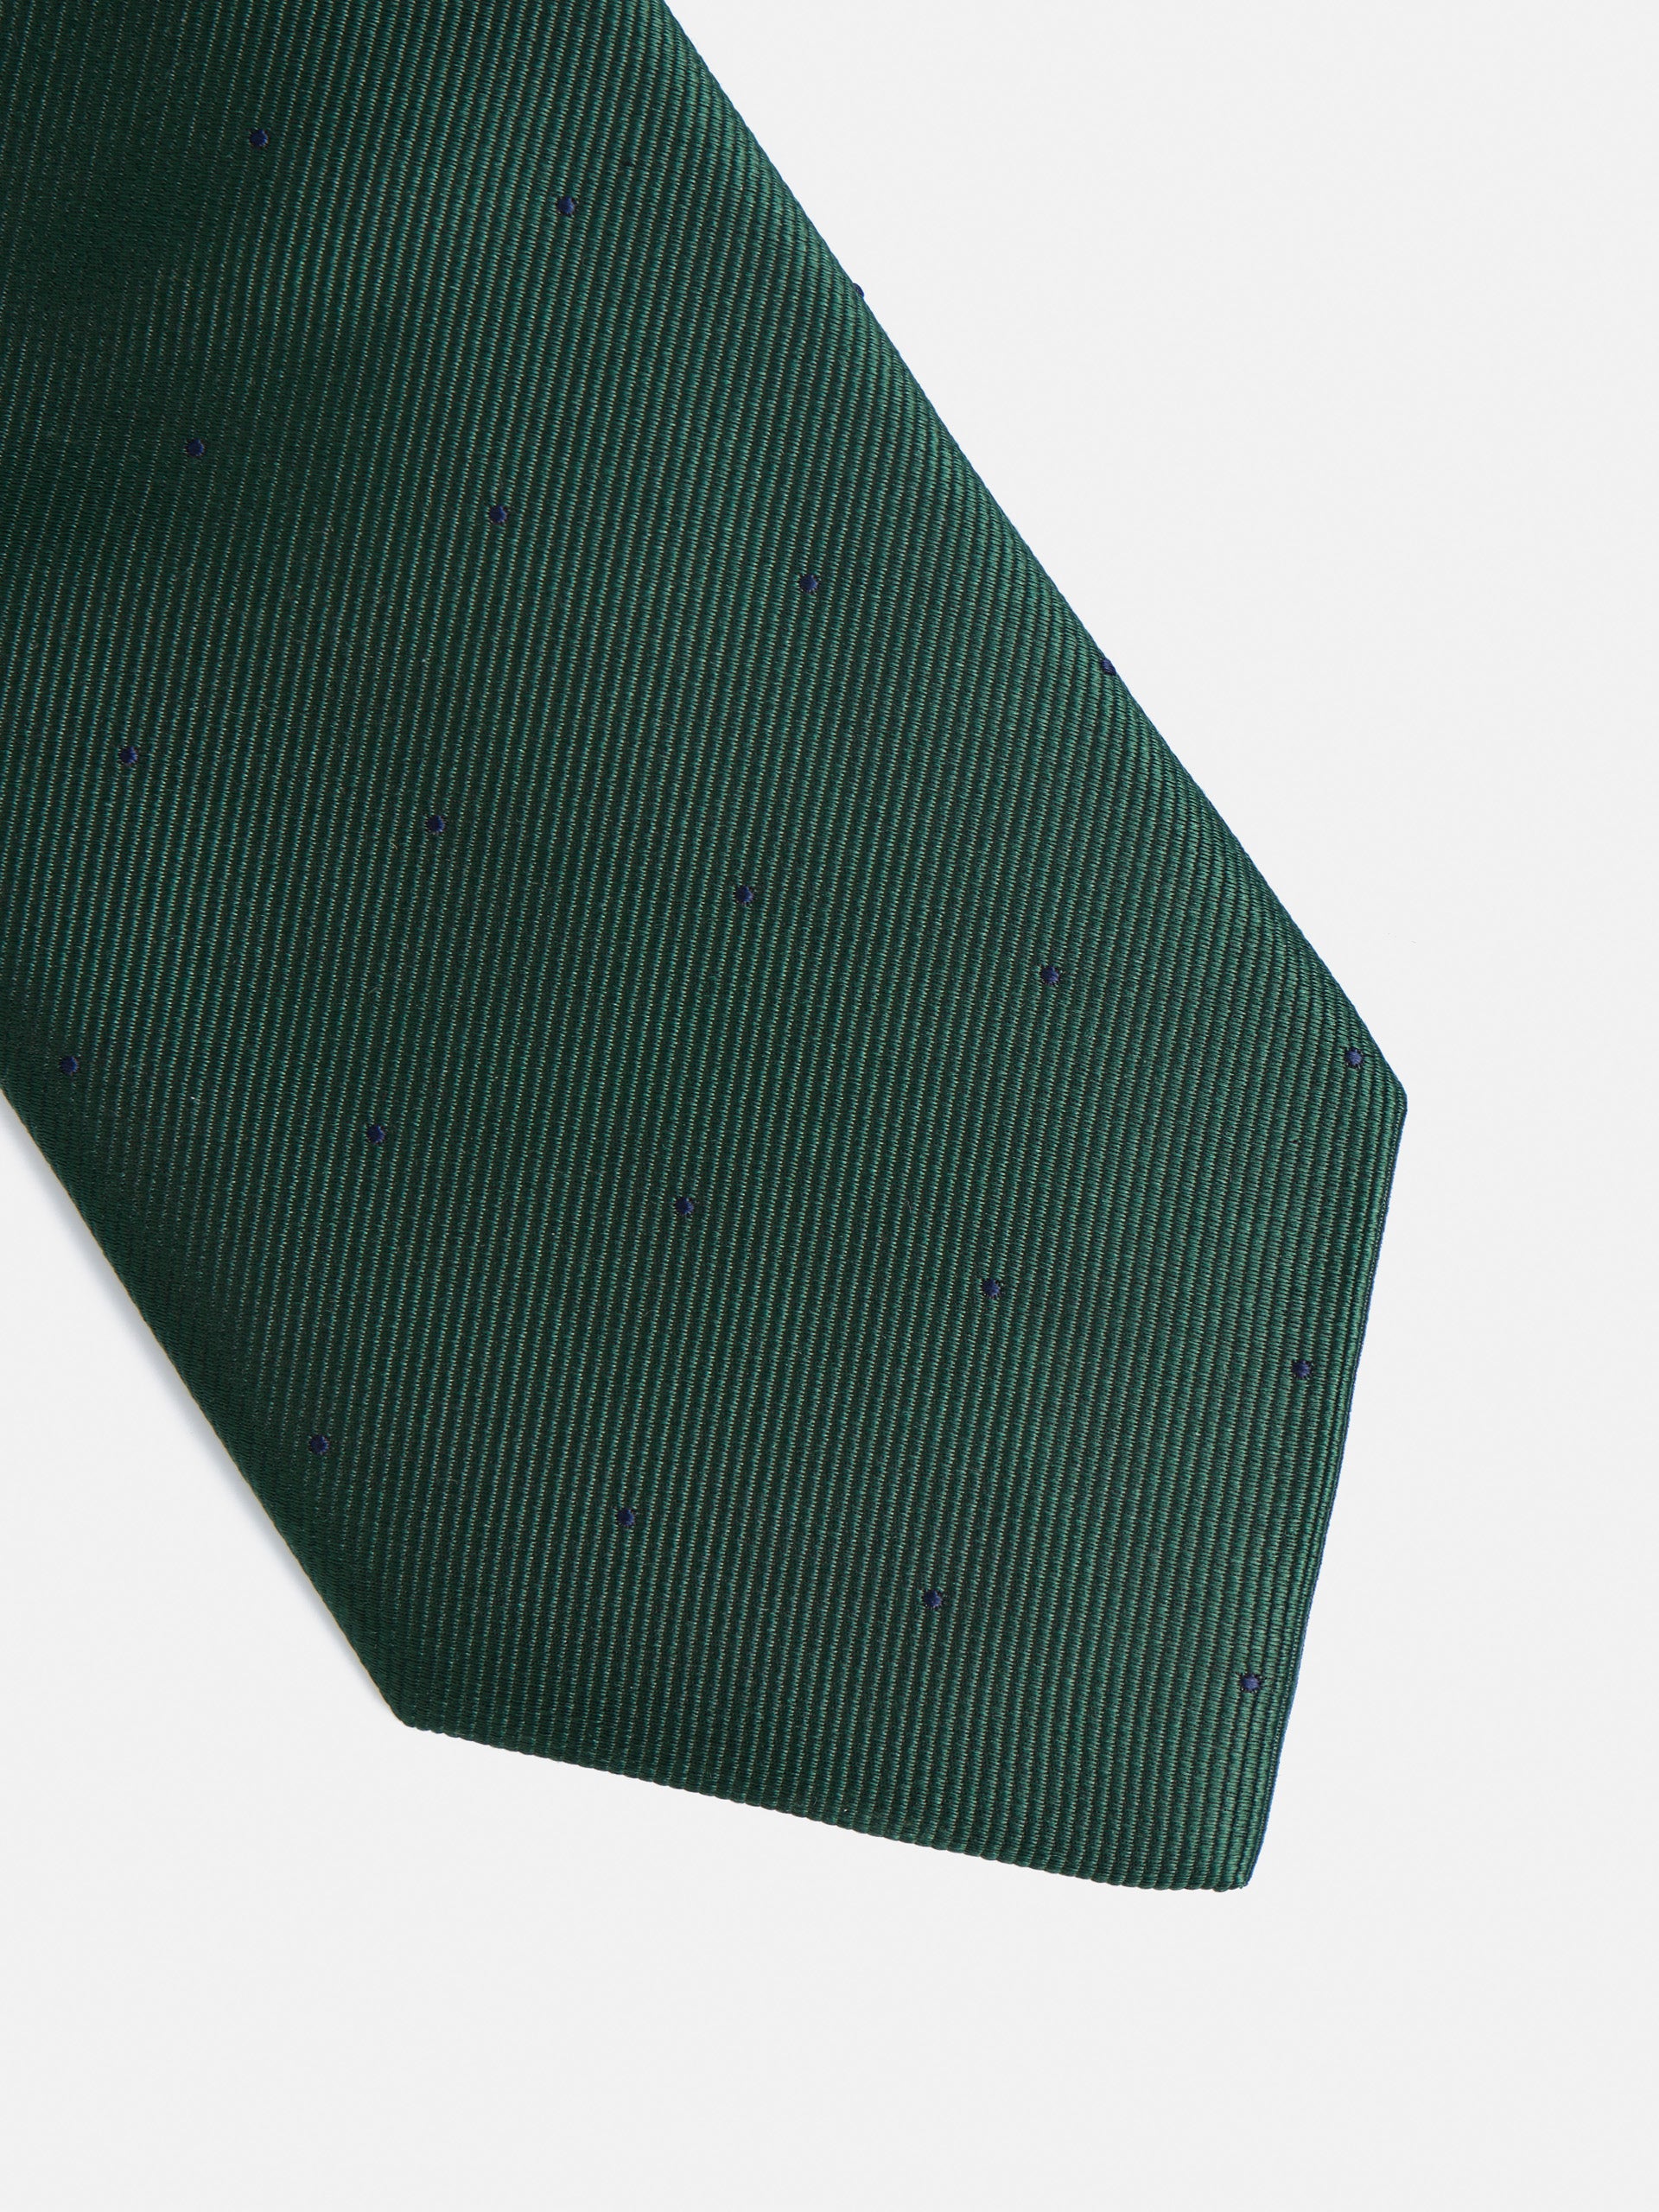 Corbata silbon mini puntos verde